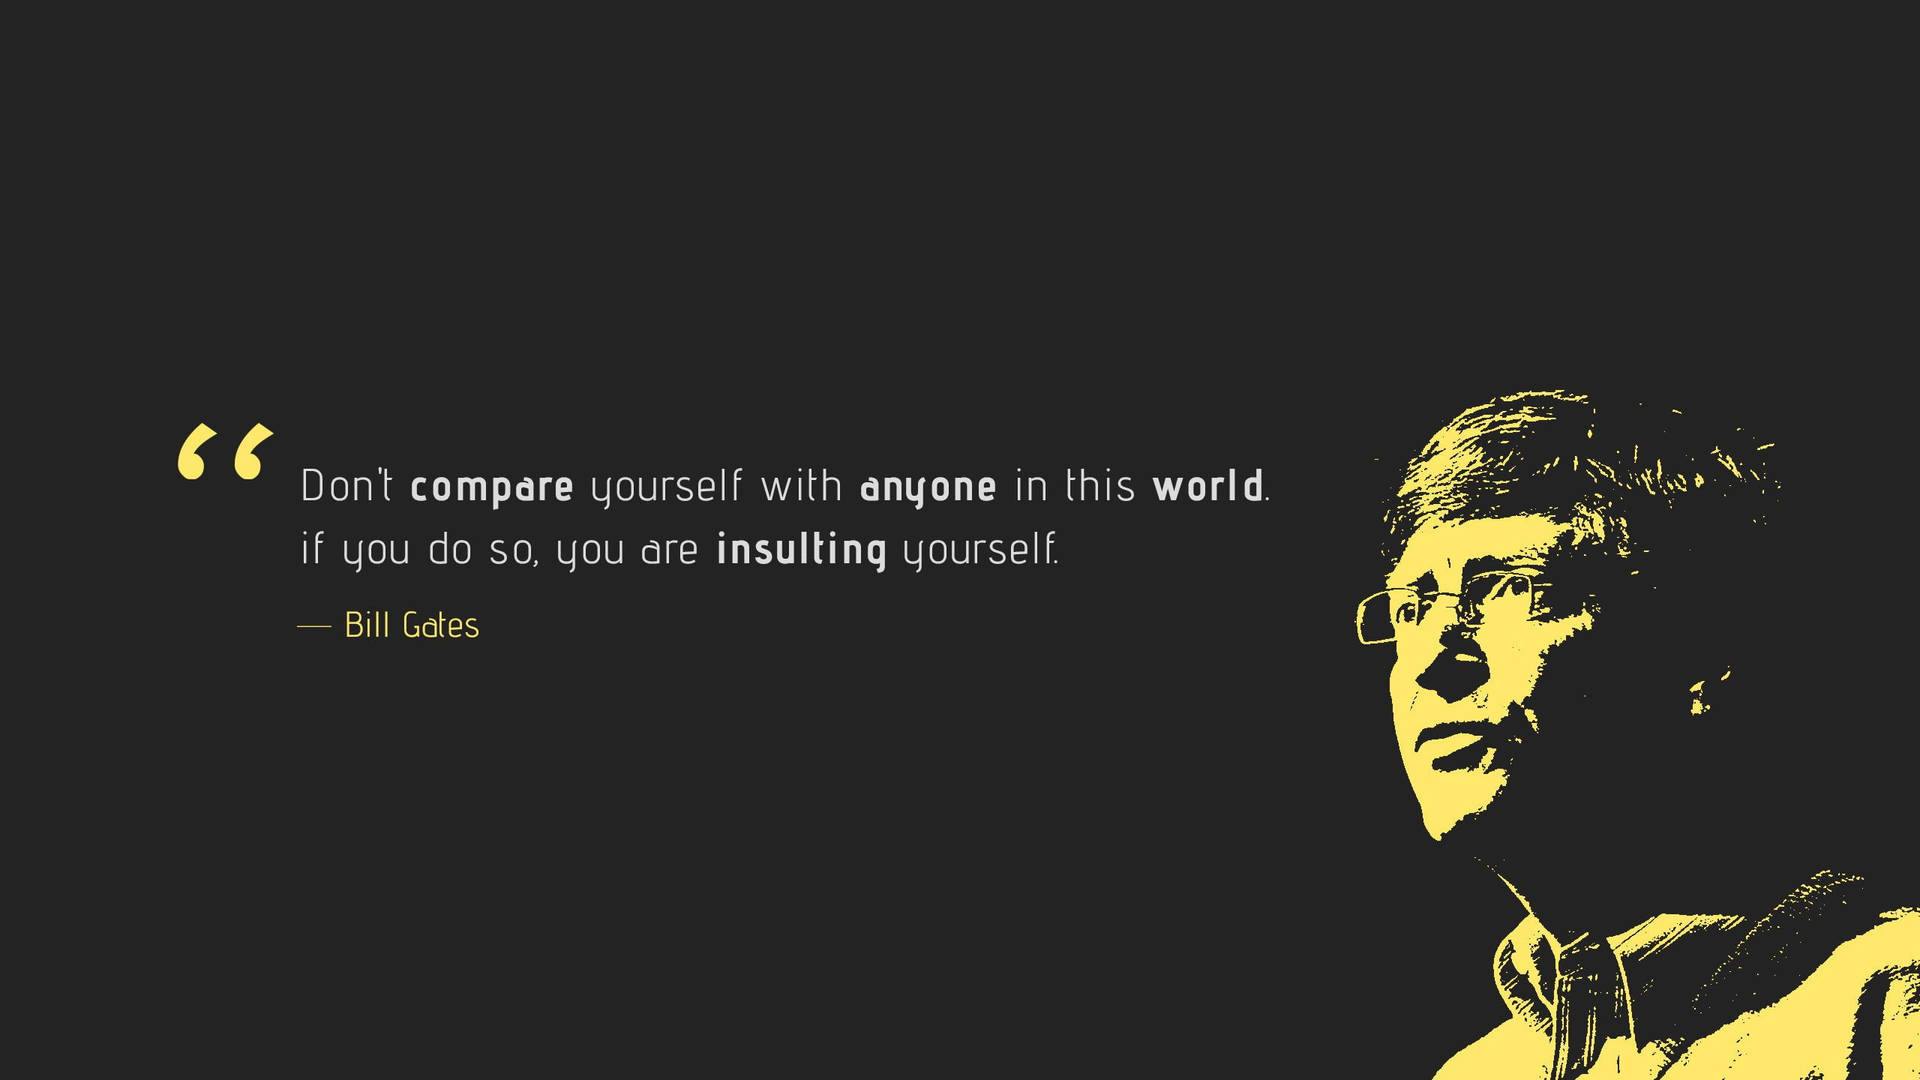 Bill Gates Quote Background